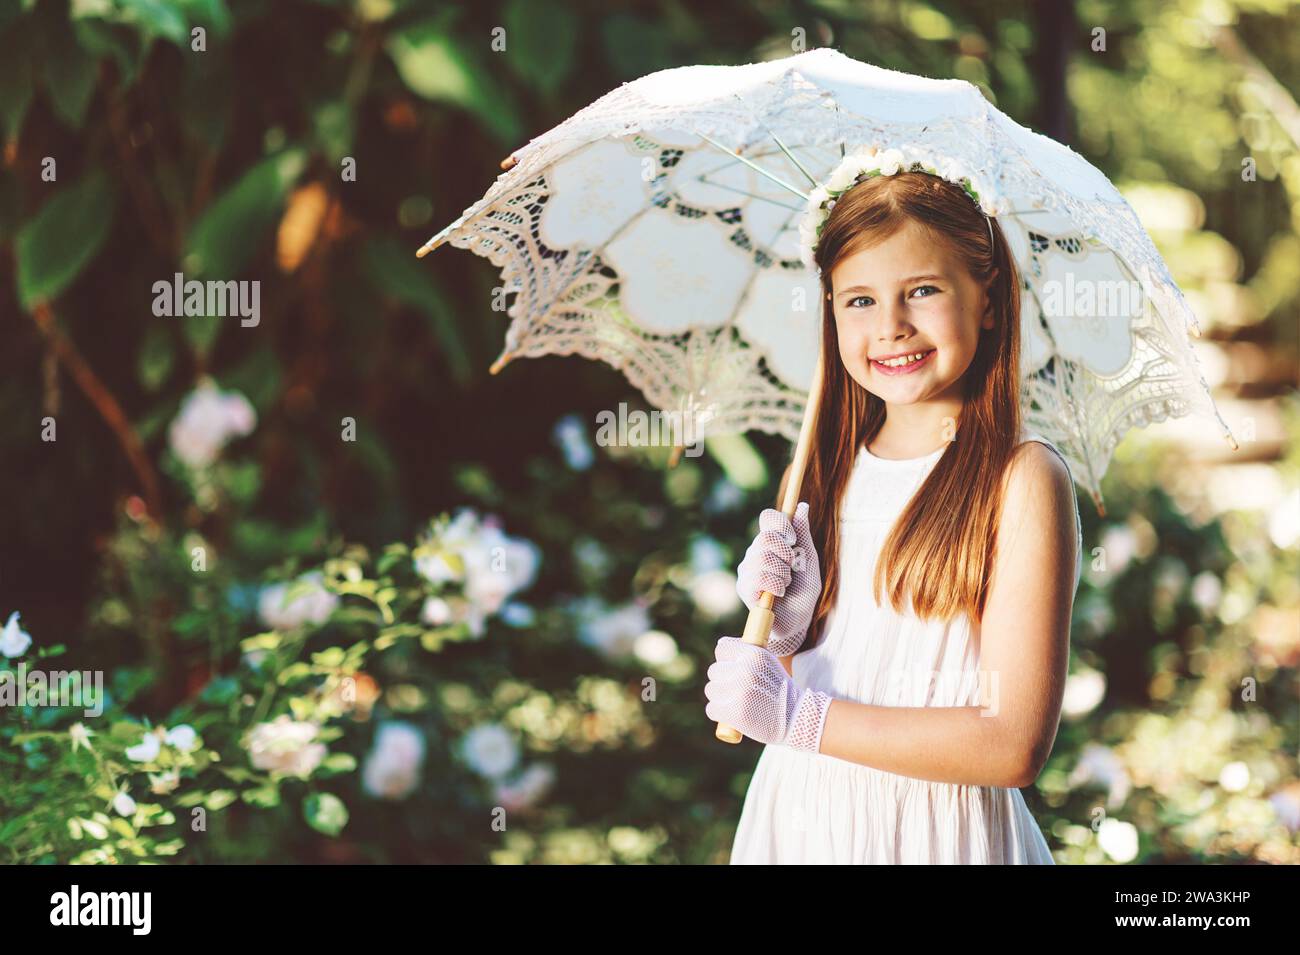 Outdoor portrait of romantic little girl, wearing white dress, gloves, flower headband, holding lace umbrella Stock Photo